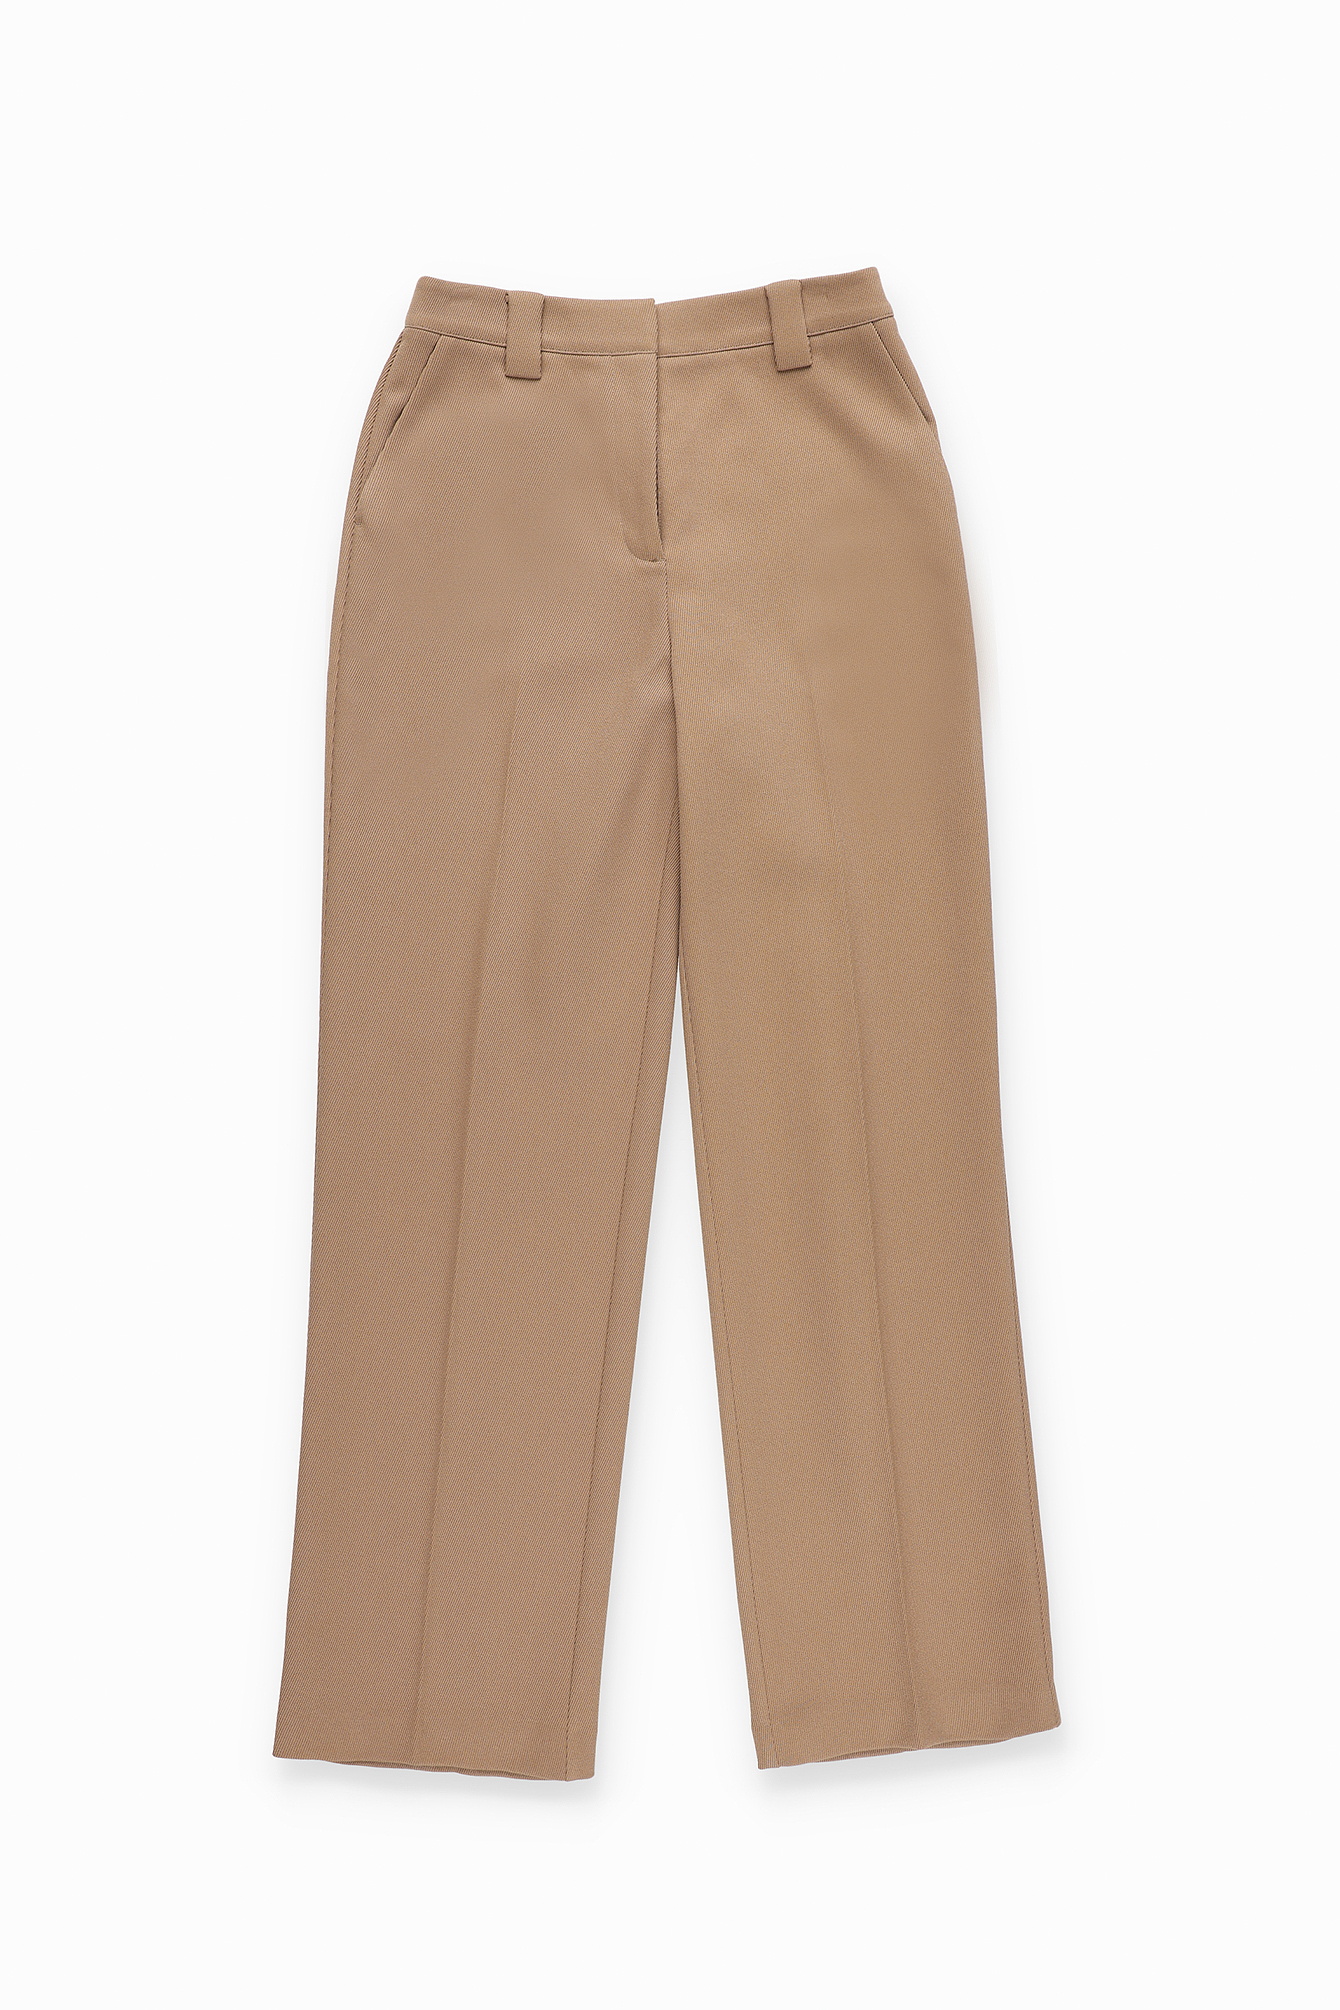 Twill Drawstring Pants - Dark beige/patterned - Ladies